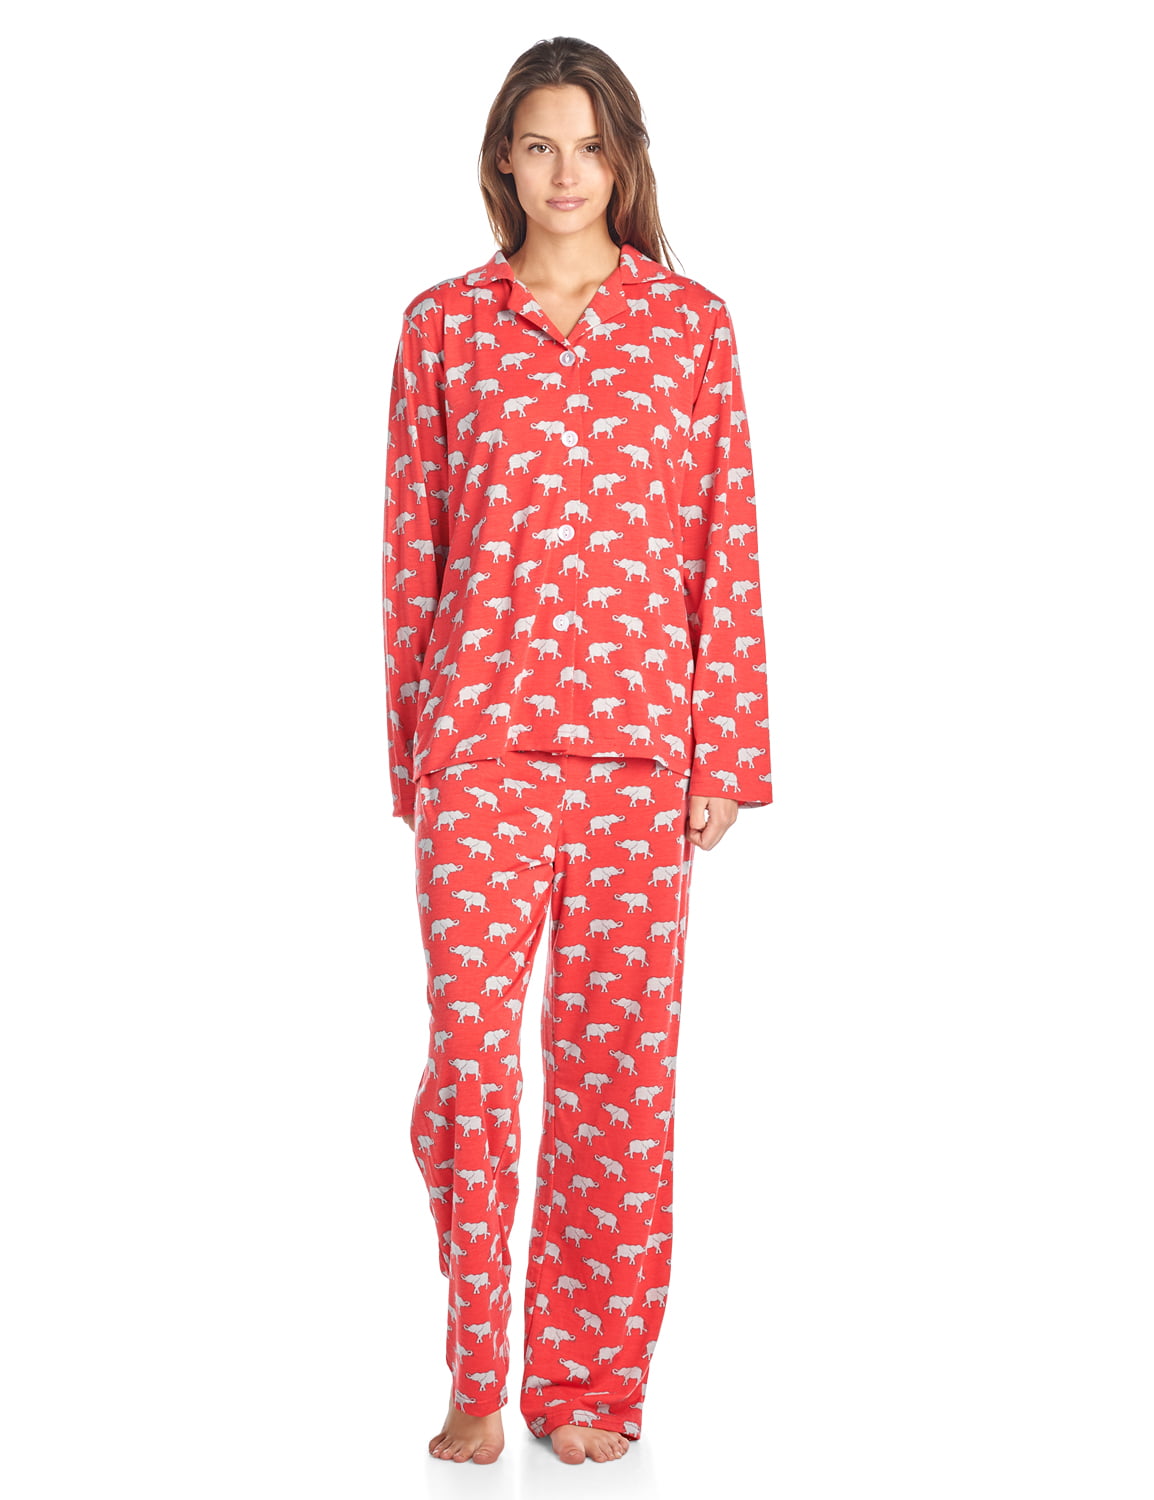 BedHead Pajamas - BHPJ By Bedhead Pajamas Women's Brushed Back Soft ...